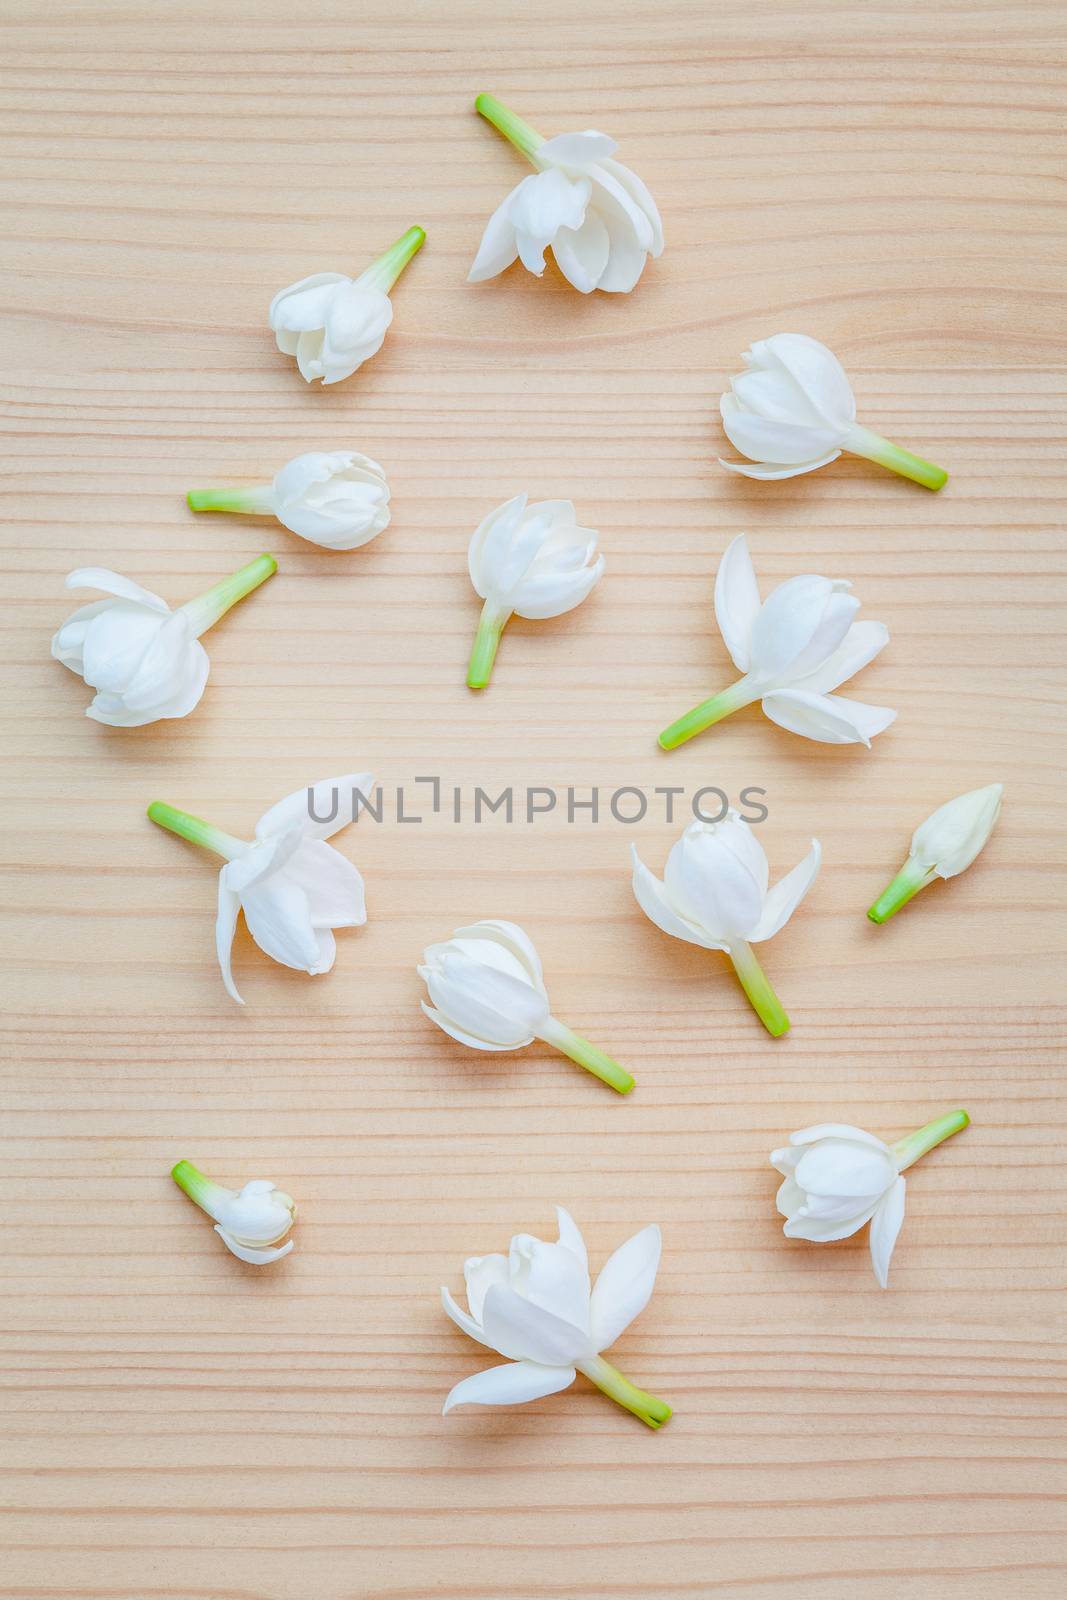 White jasmine flowers on wooden background. The delicate rain se by kerdkanno